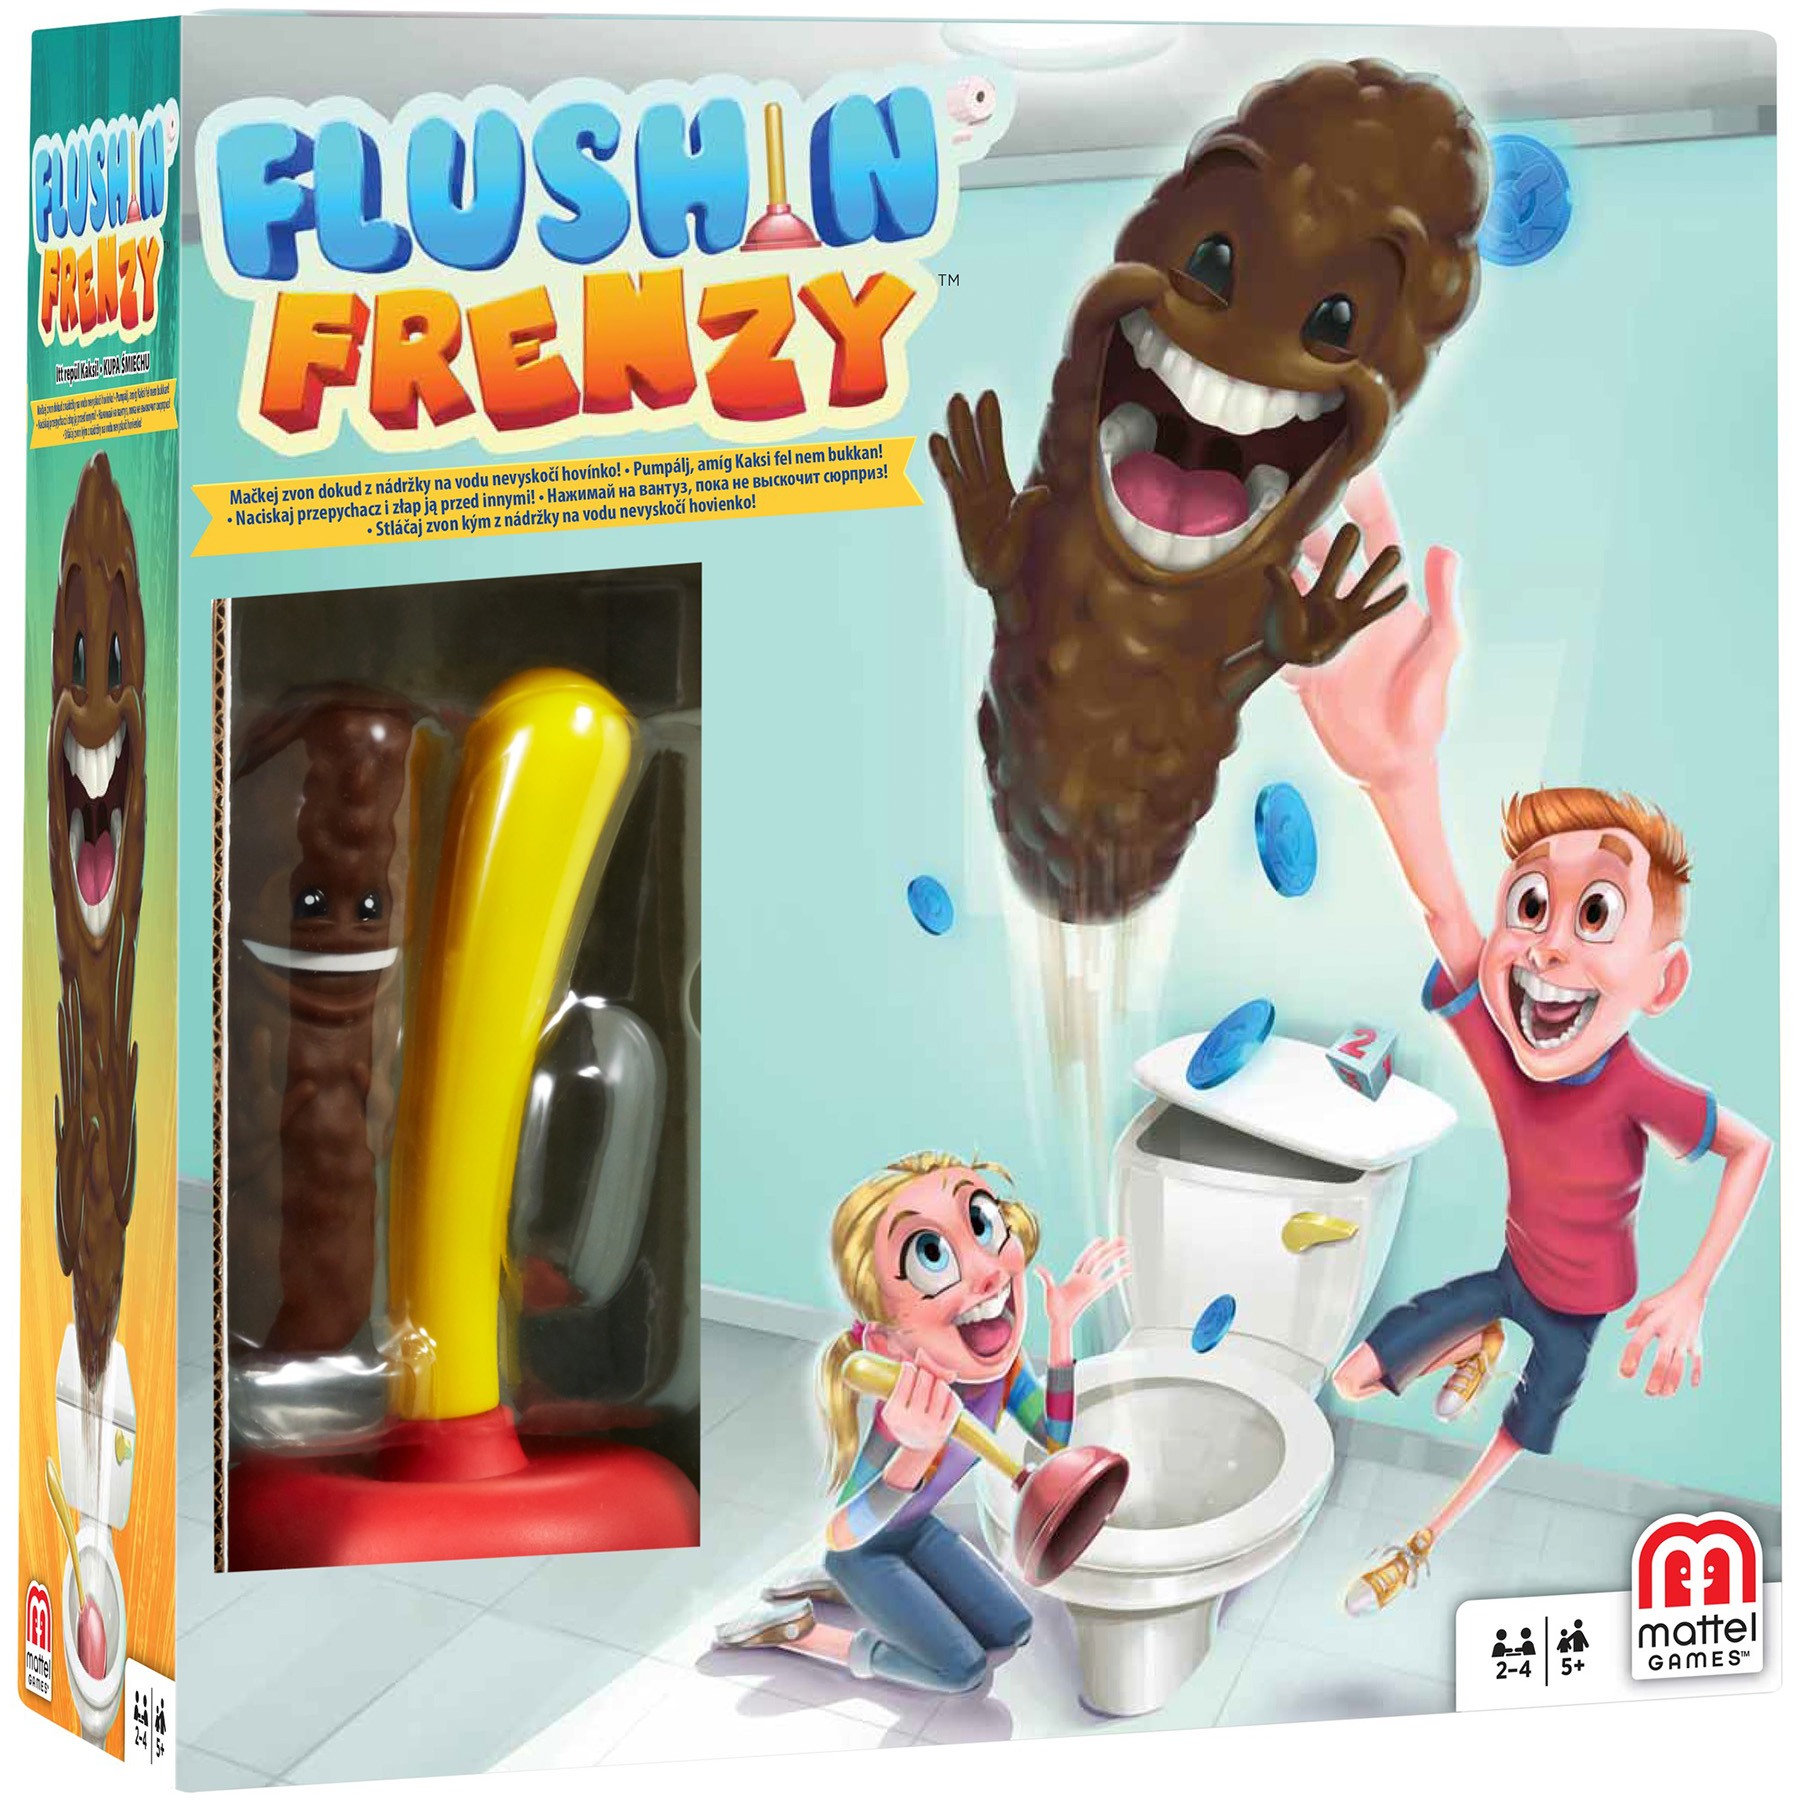 Skibidi туалет игрушка. Игрушка унитаз. Mattel games. Flushin Frenzy. Игрушка унитаз с монстрами.